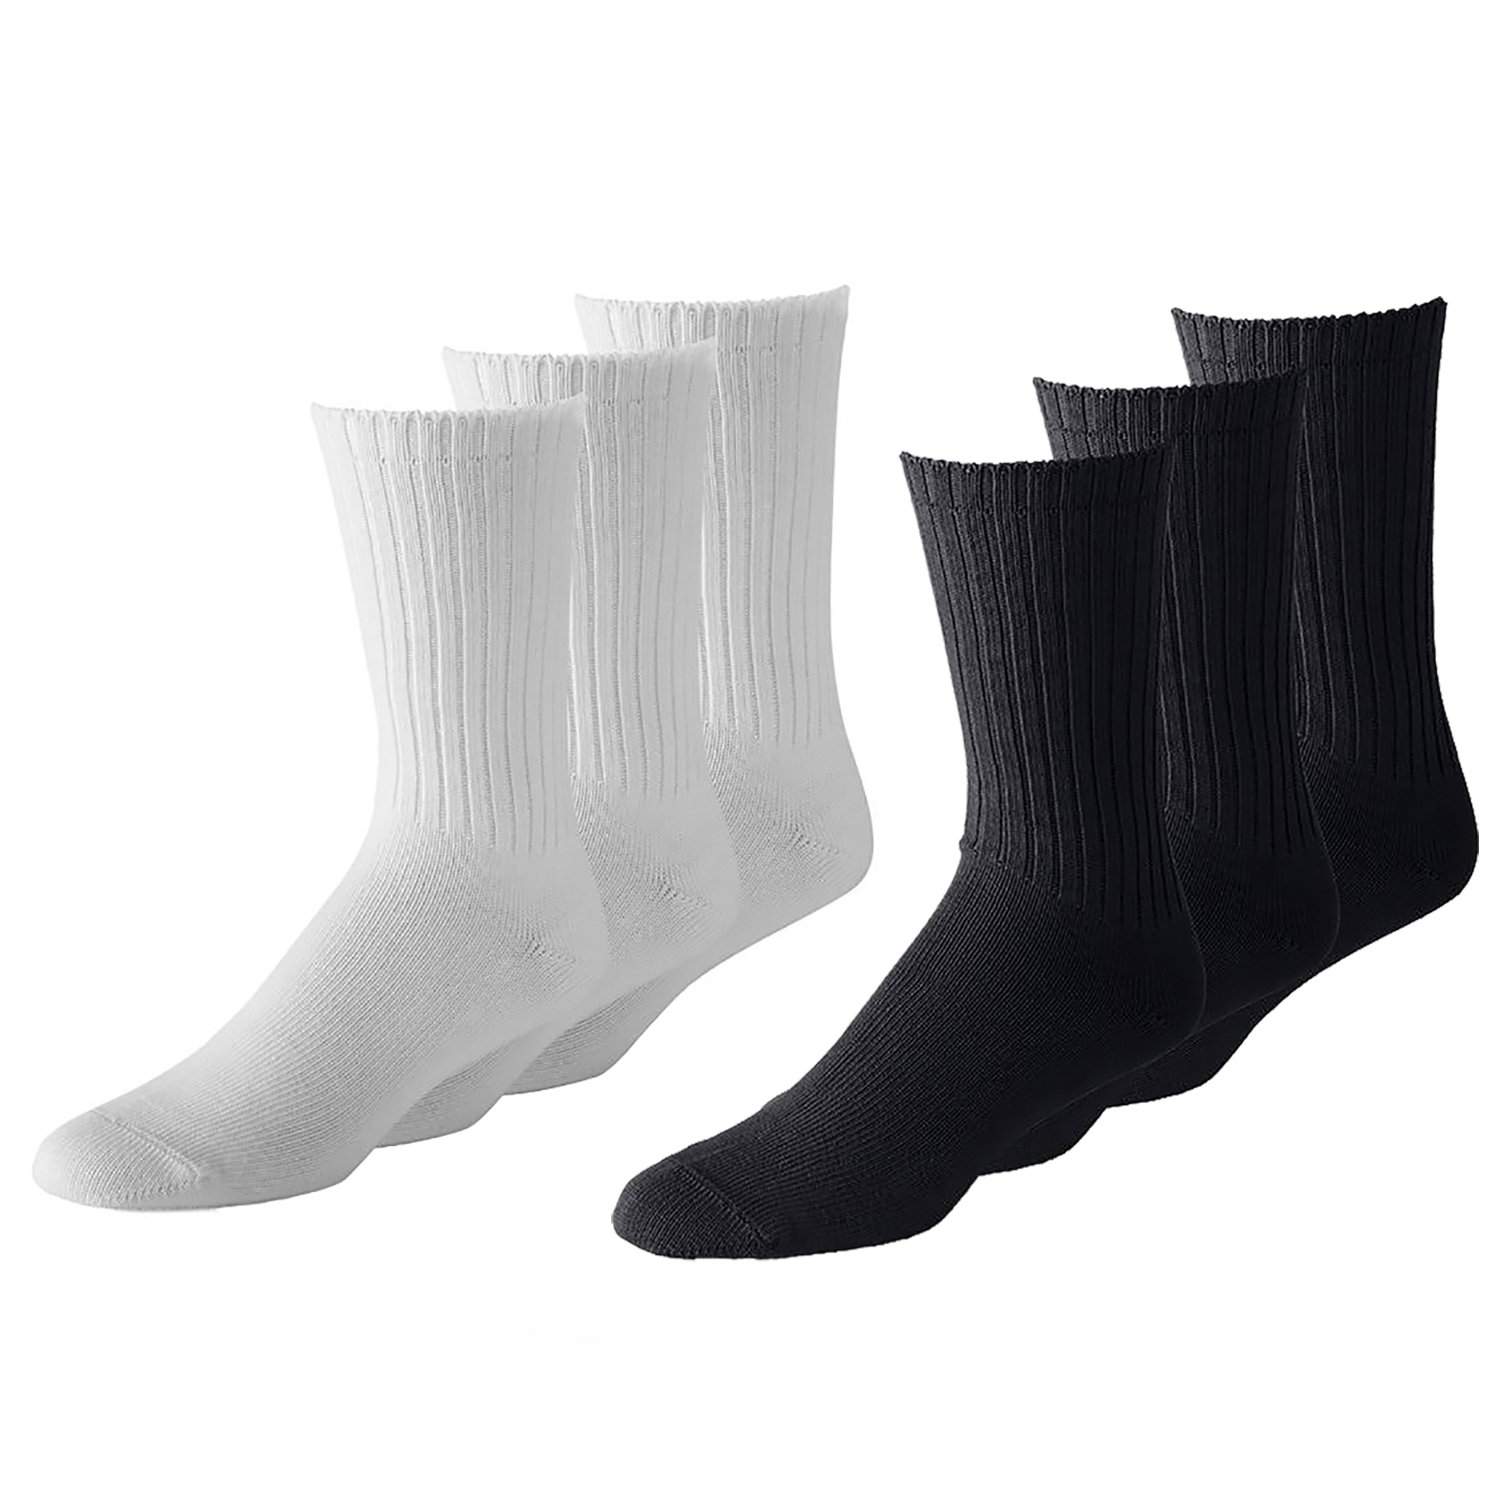 240 Pairs Women's Athletic Crew Socks - Bulk Wholesale Packs - Any Shoe Size